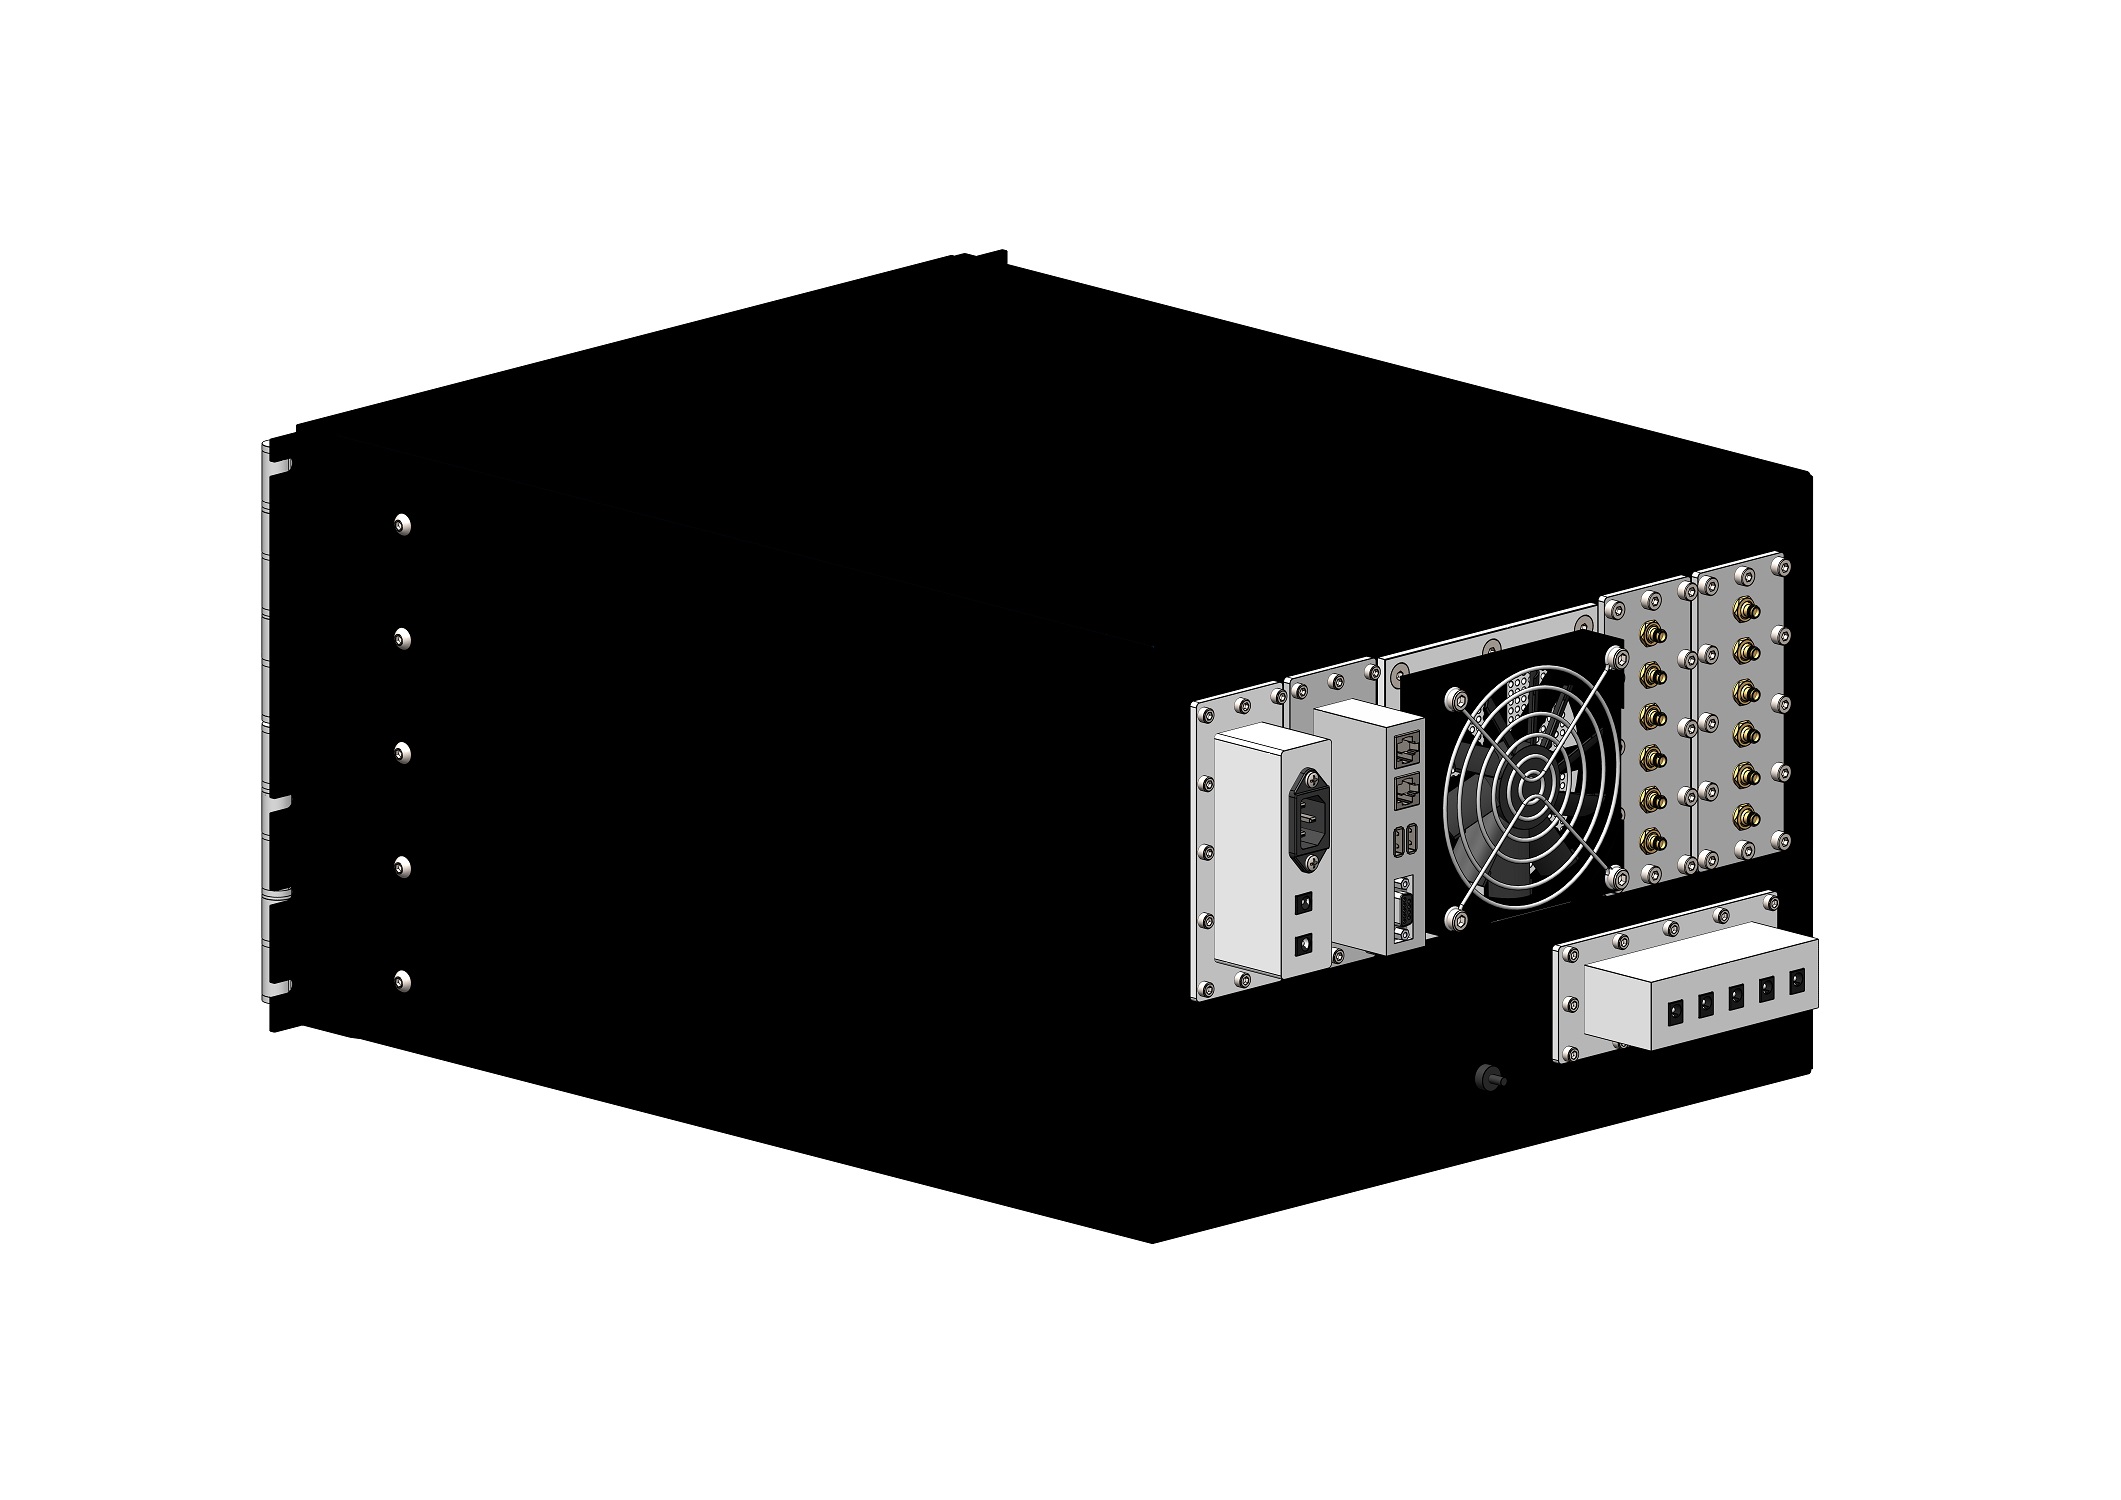 HDRF-1160-R RF Shield Test Box